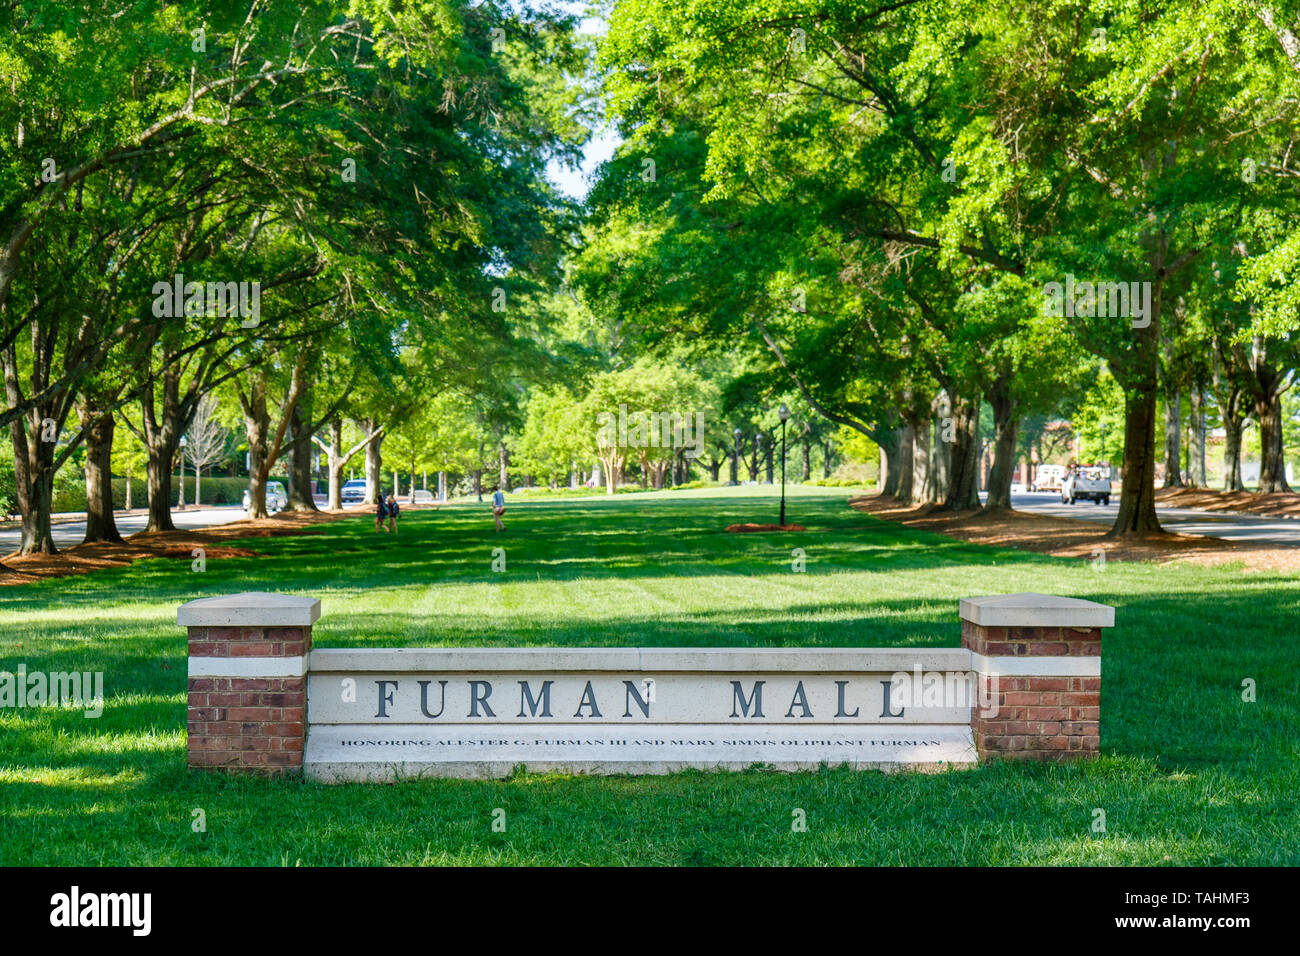 GREENVILLE, SC, USA - 2. Mai: Furman Mall an der Furman University am 2. Mai 2019 in Greenville, South Carolina. Stockfoto